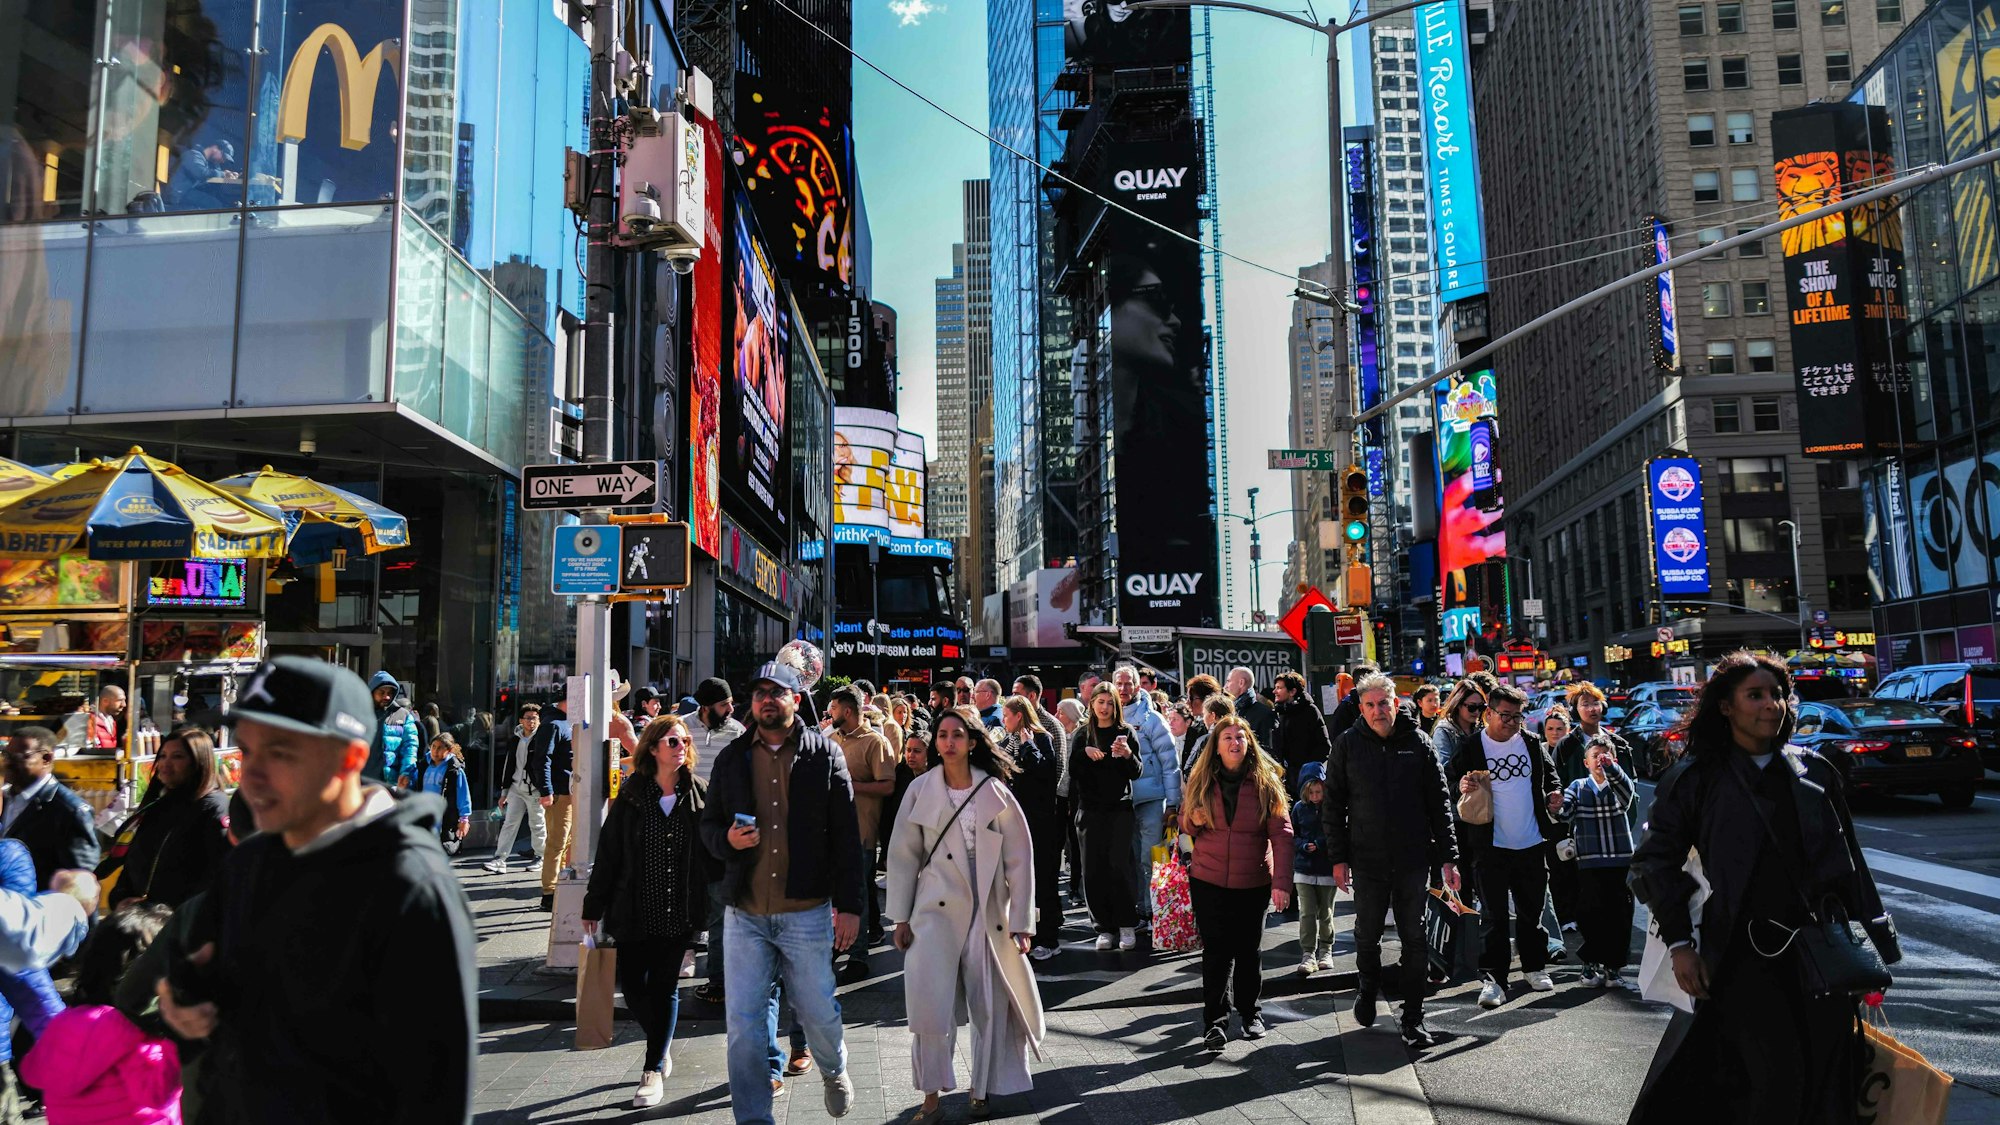 Menschenmengen am New York Times Square (Archivbild)